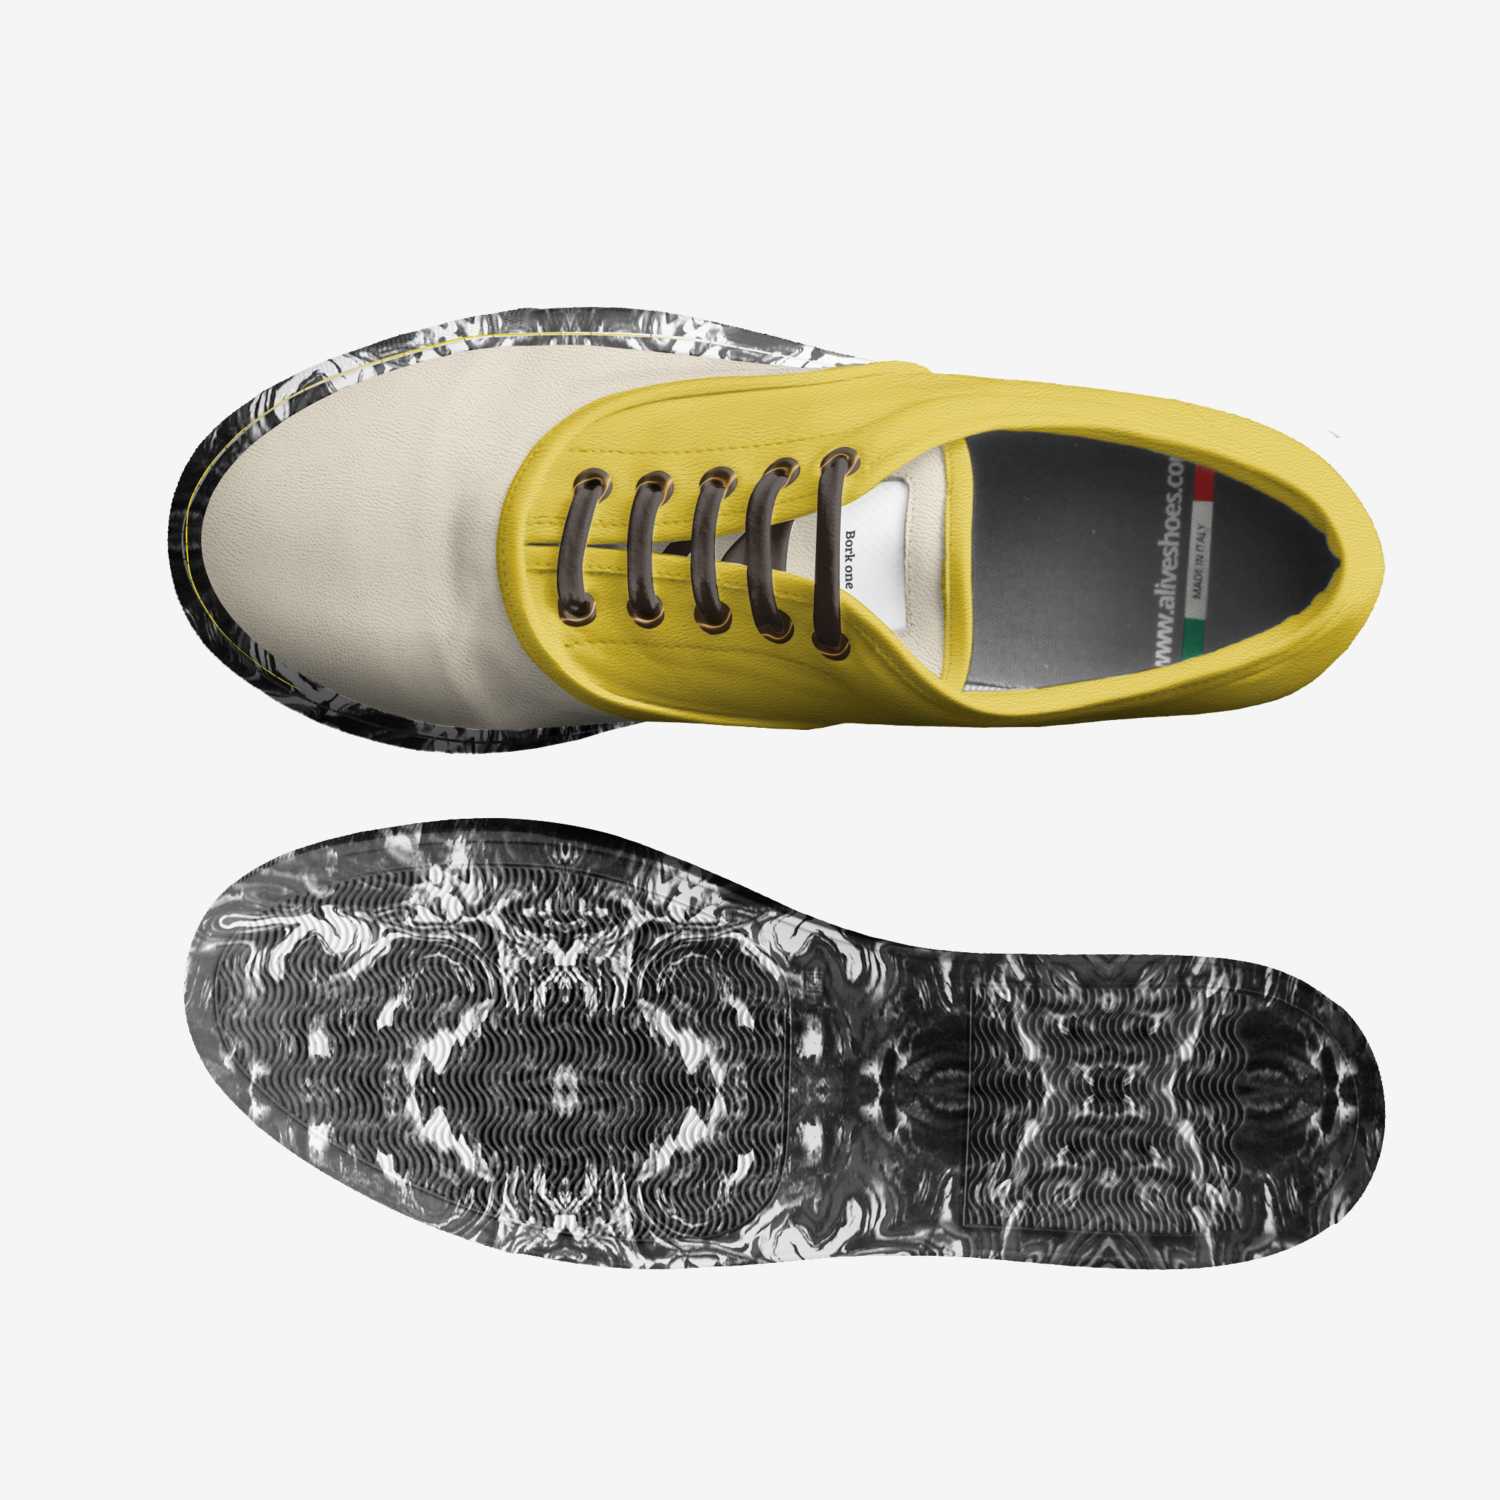 Bork 1 | A Custom Shoe concept by Eb